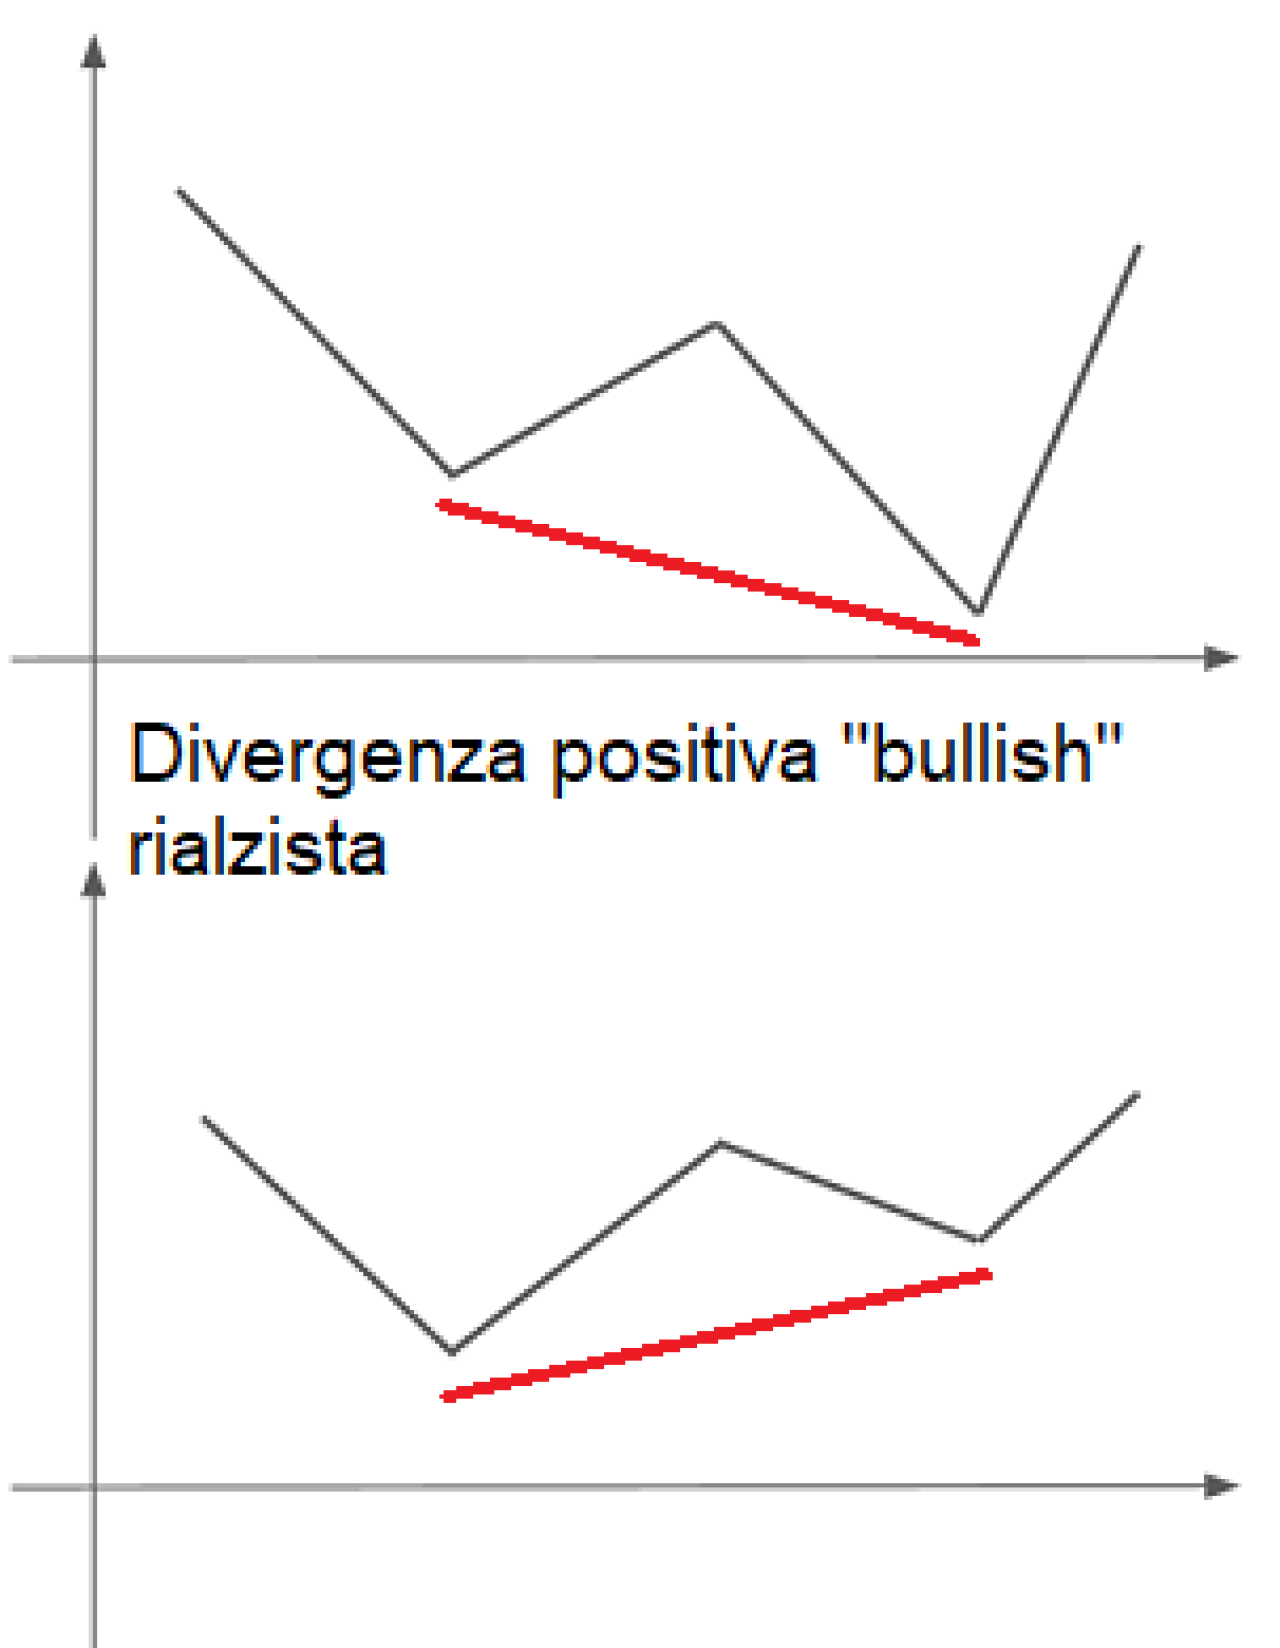 RSI divergenza positiva bullish rialzista.